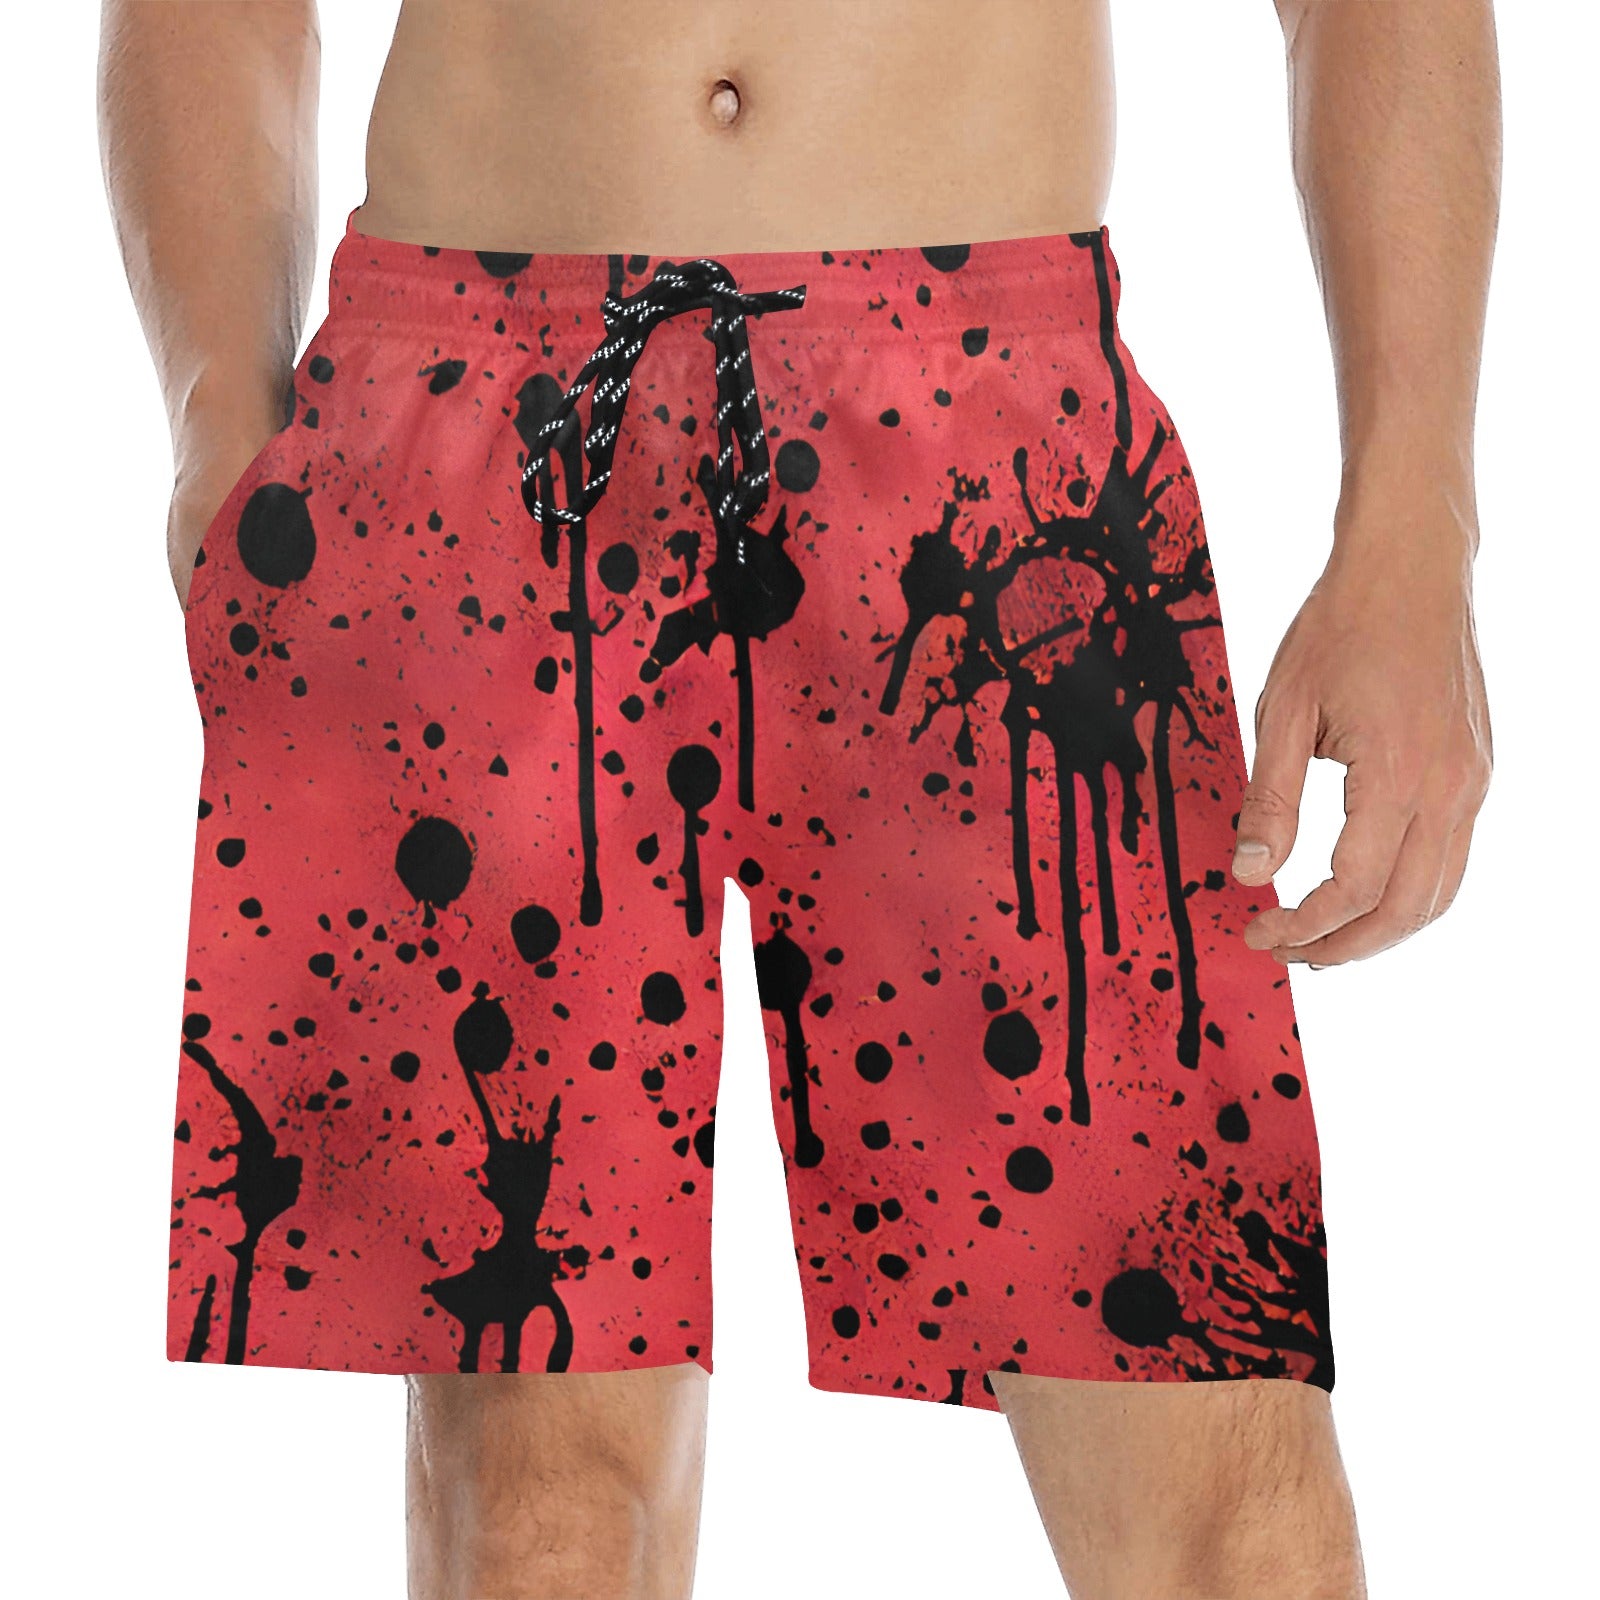 Black Ink Splatters Beach Shorts